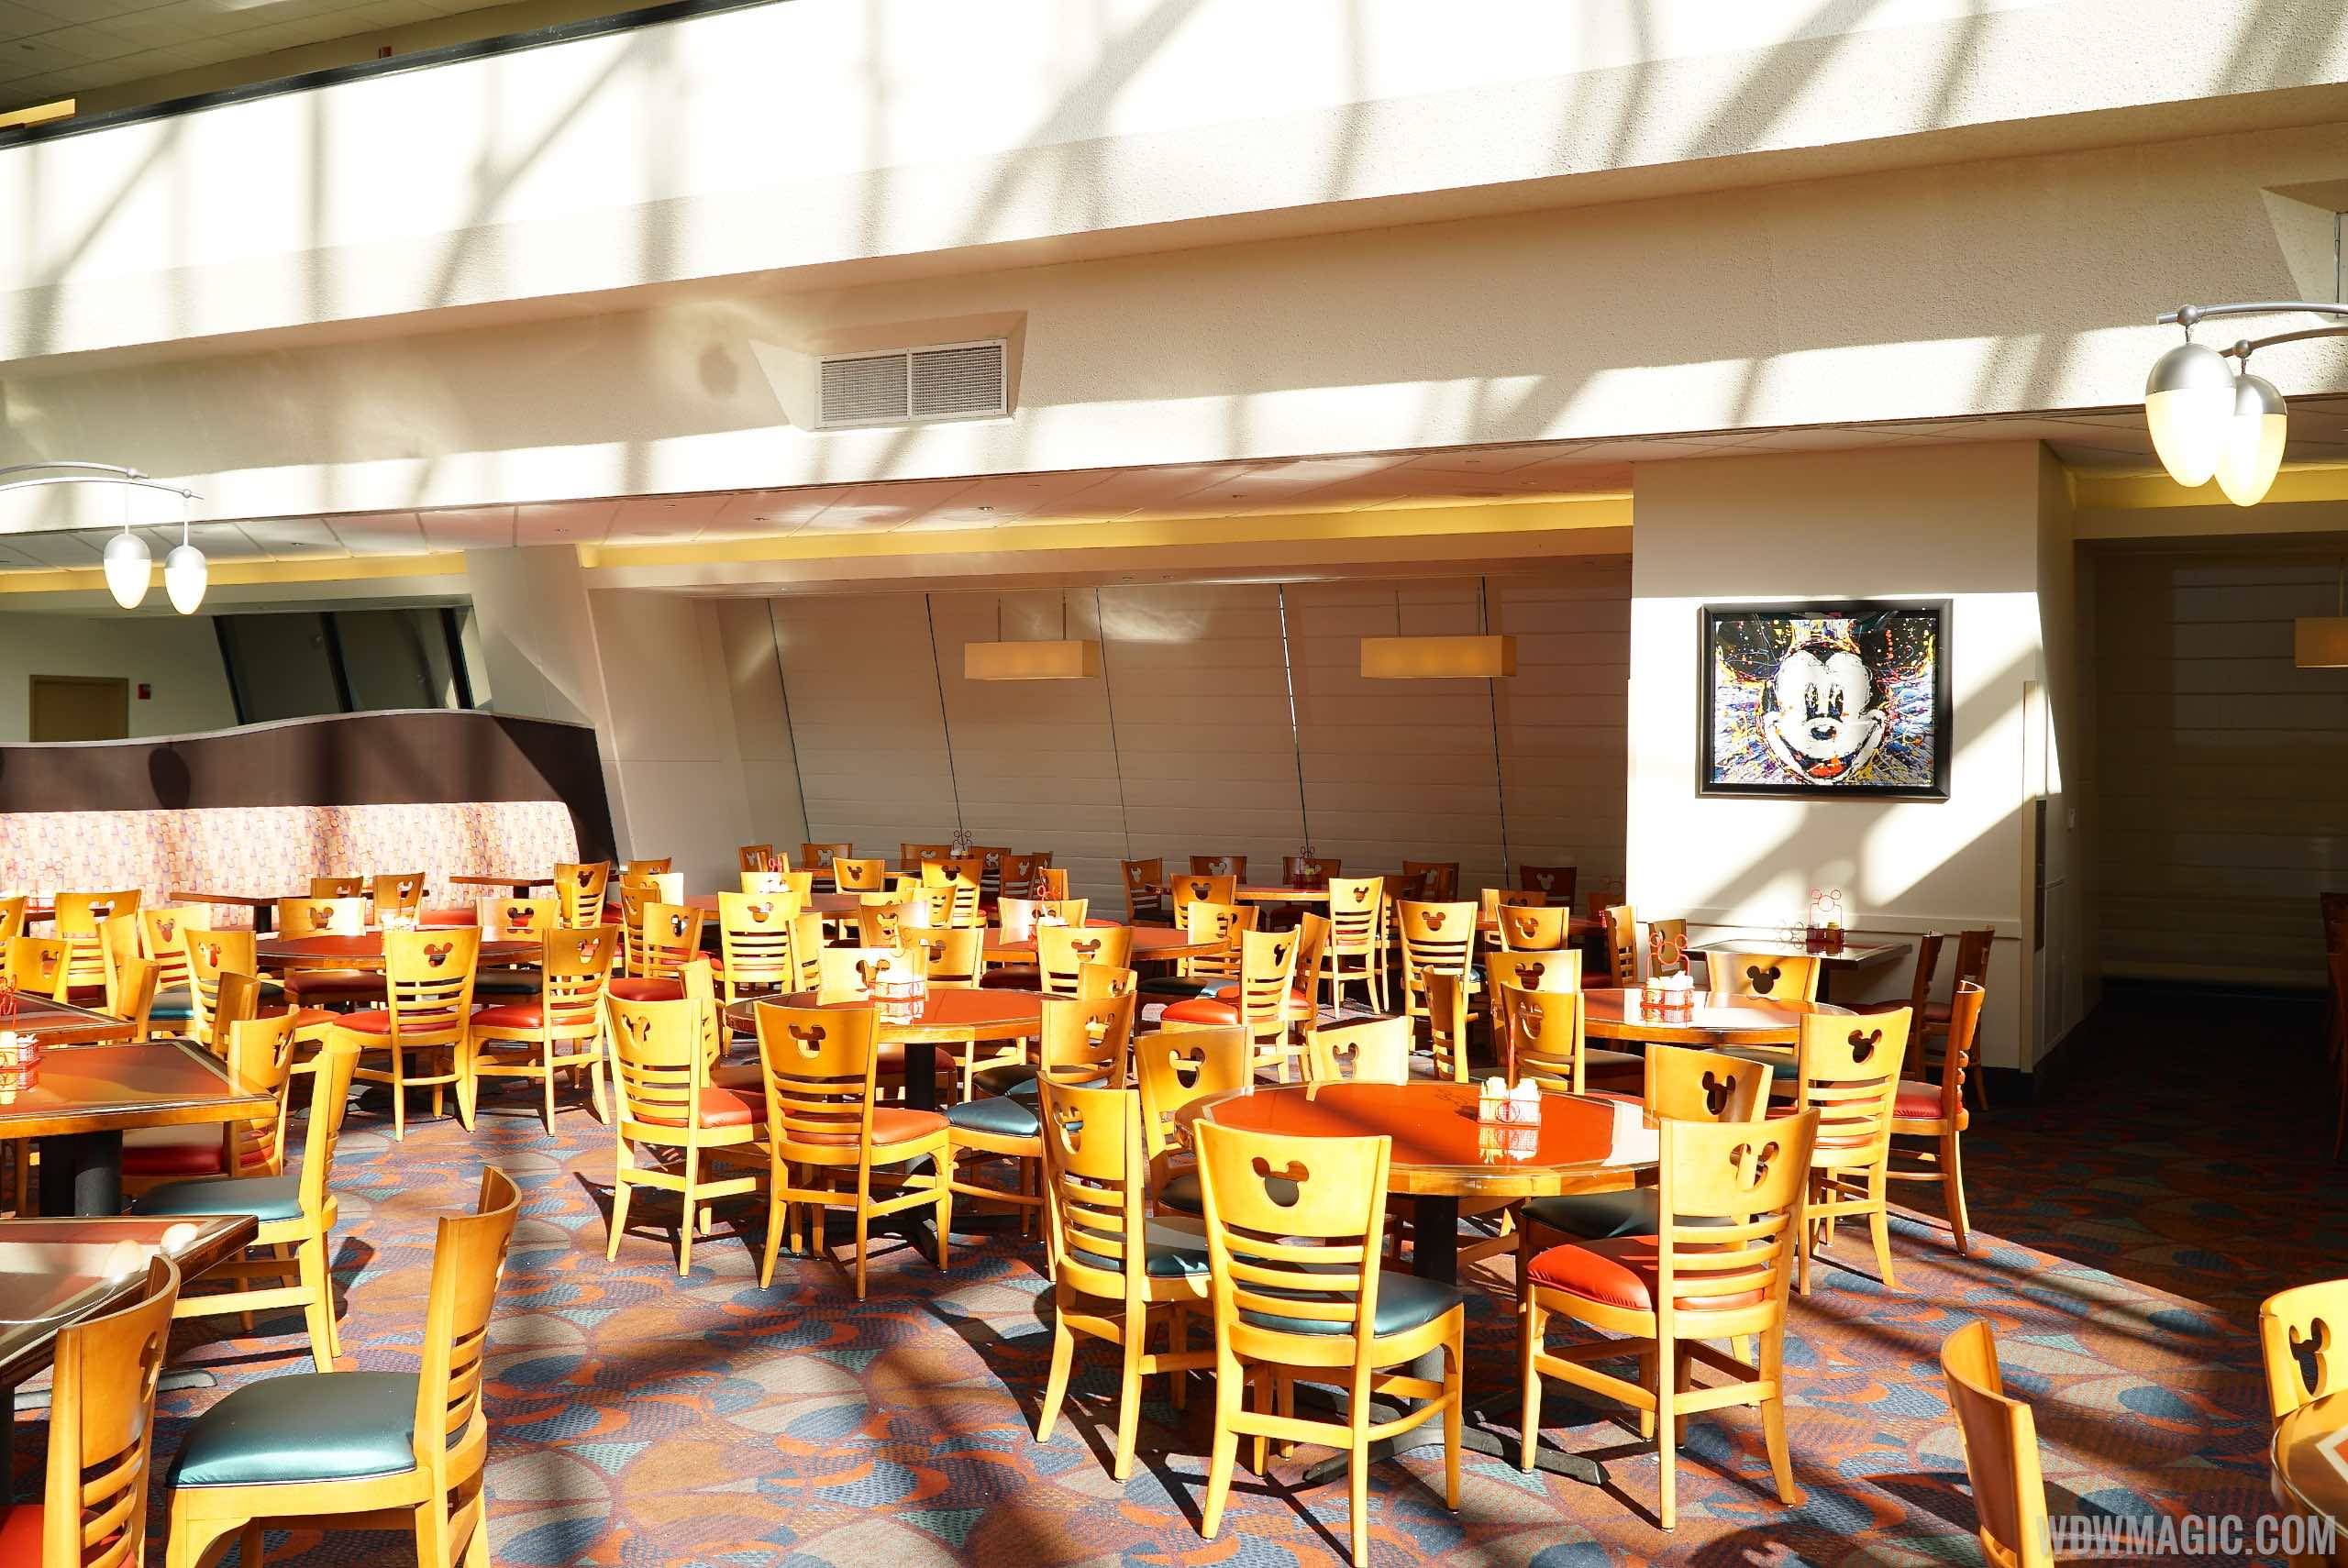 Walt Disney World's Chef Mickey's restaurant will return to buffet dining in March 2023